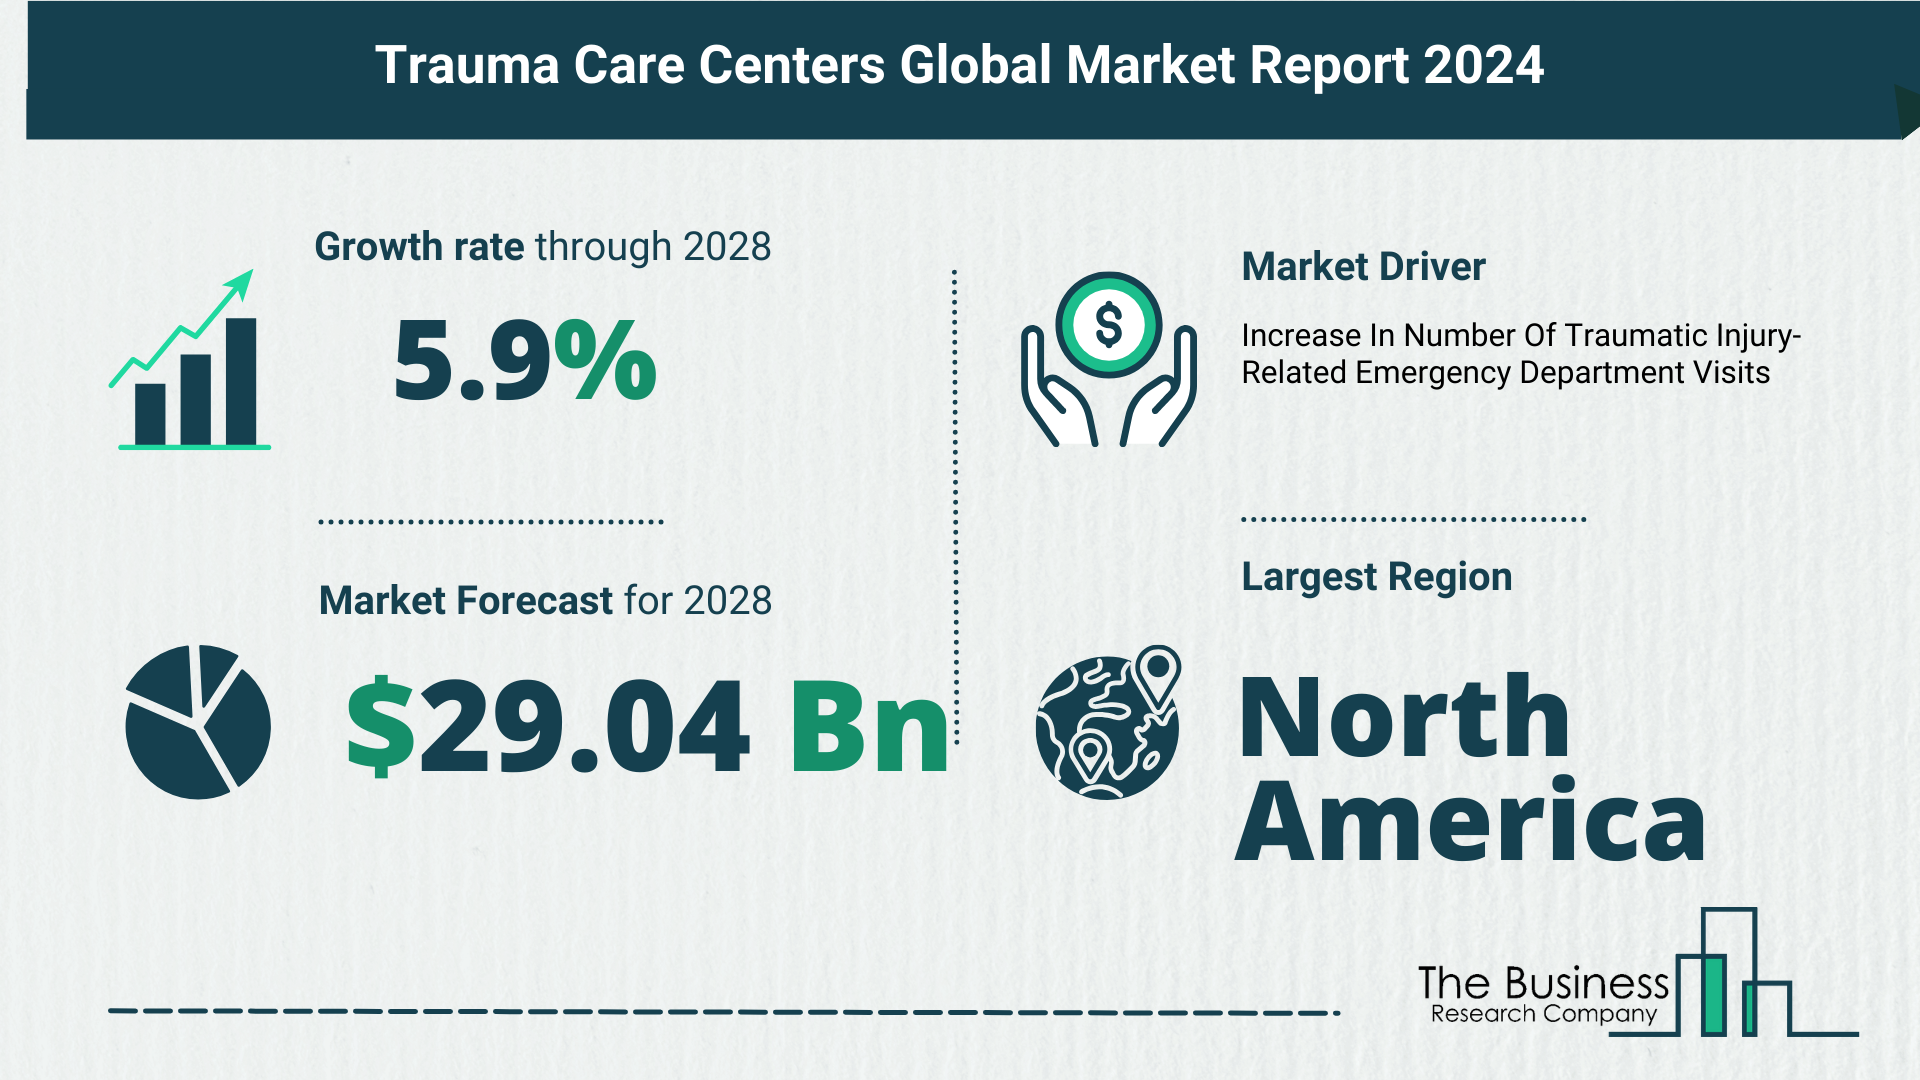 Global Trauma Care Centers Market